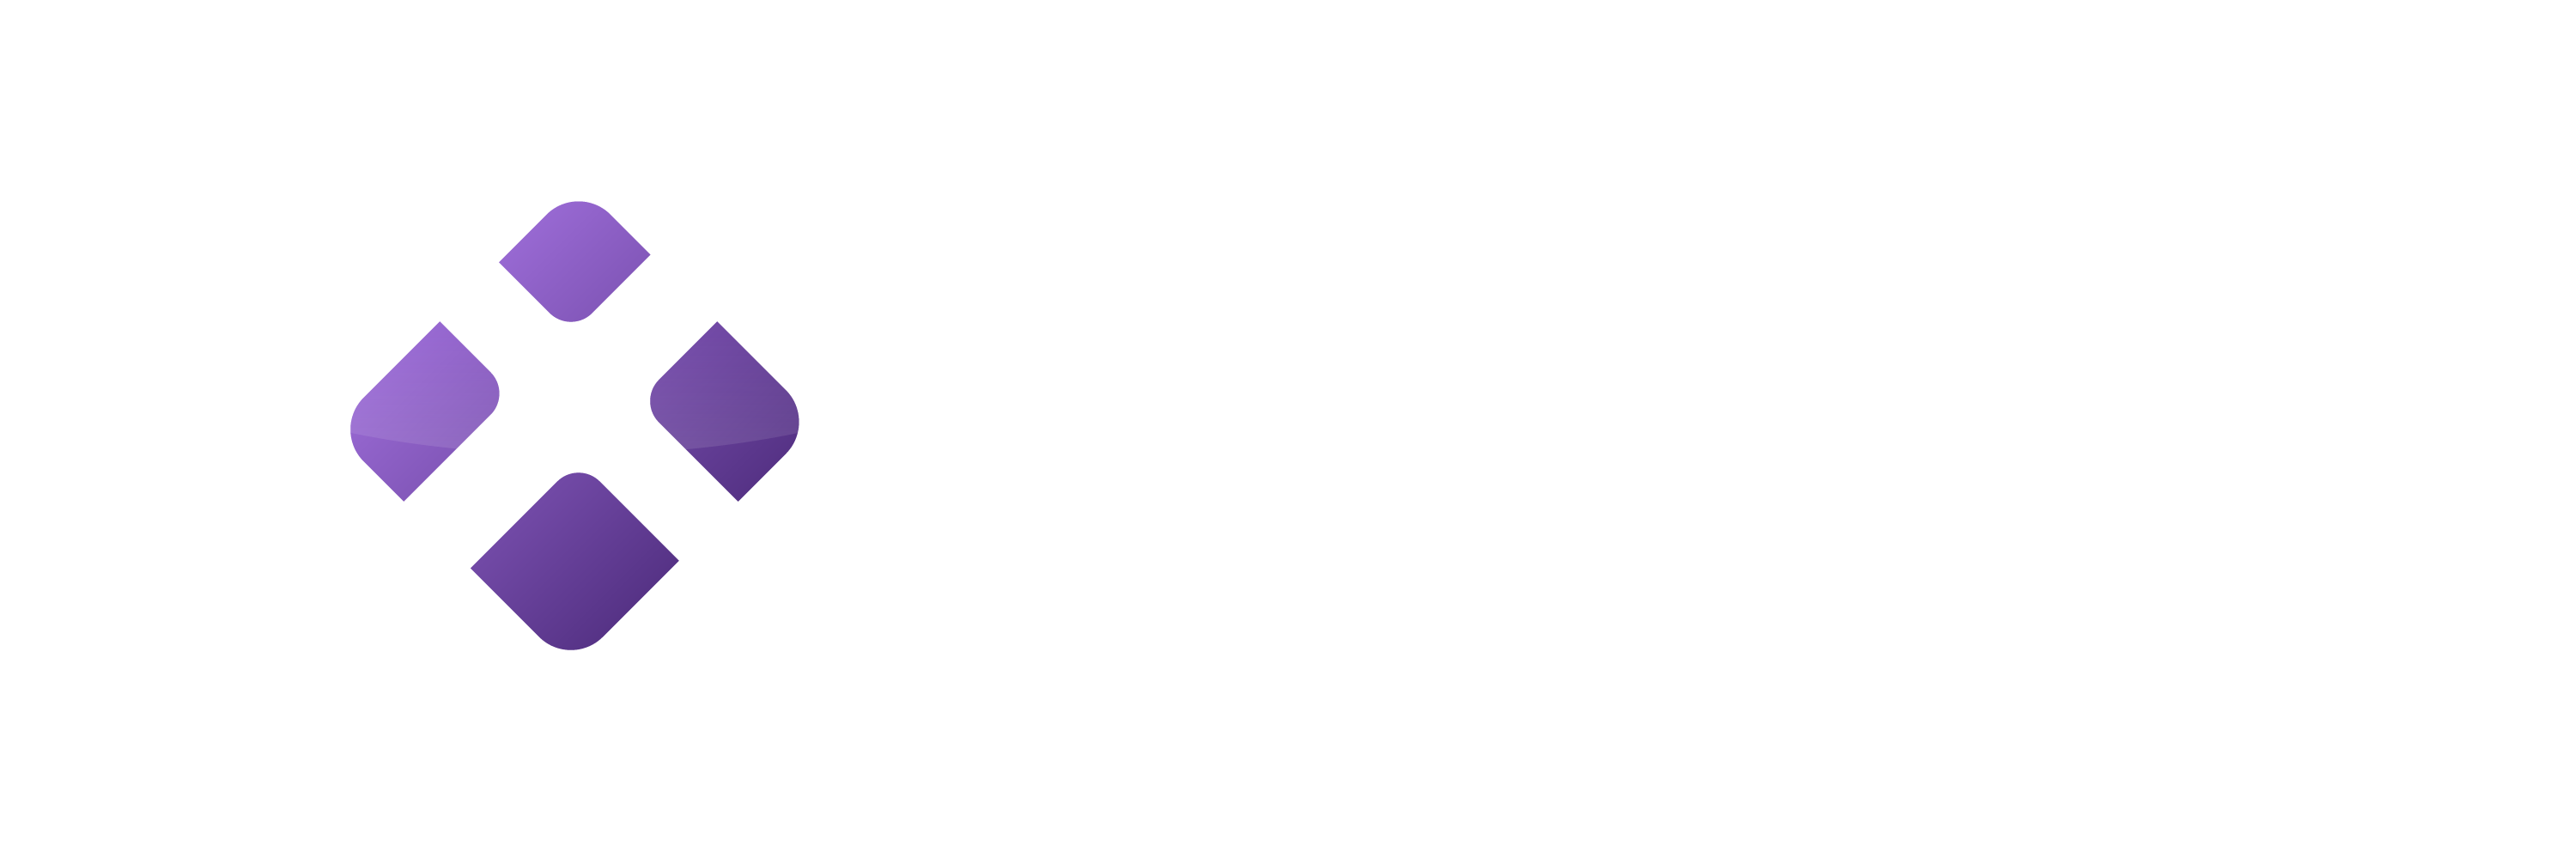 2-xtechknowledge-logo-horizontal-broken-alternative